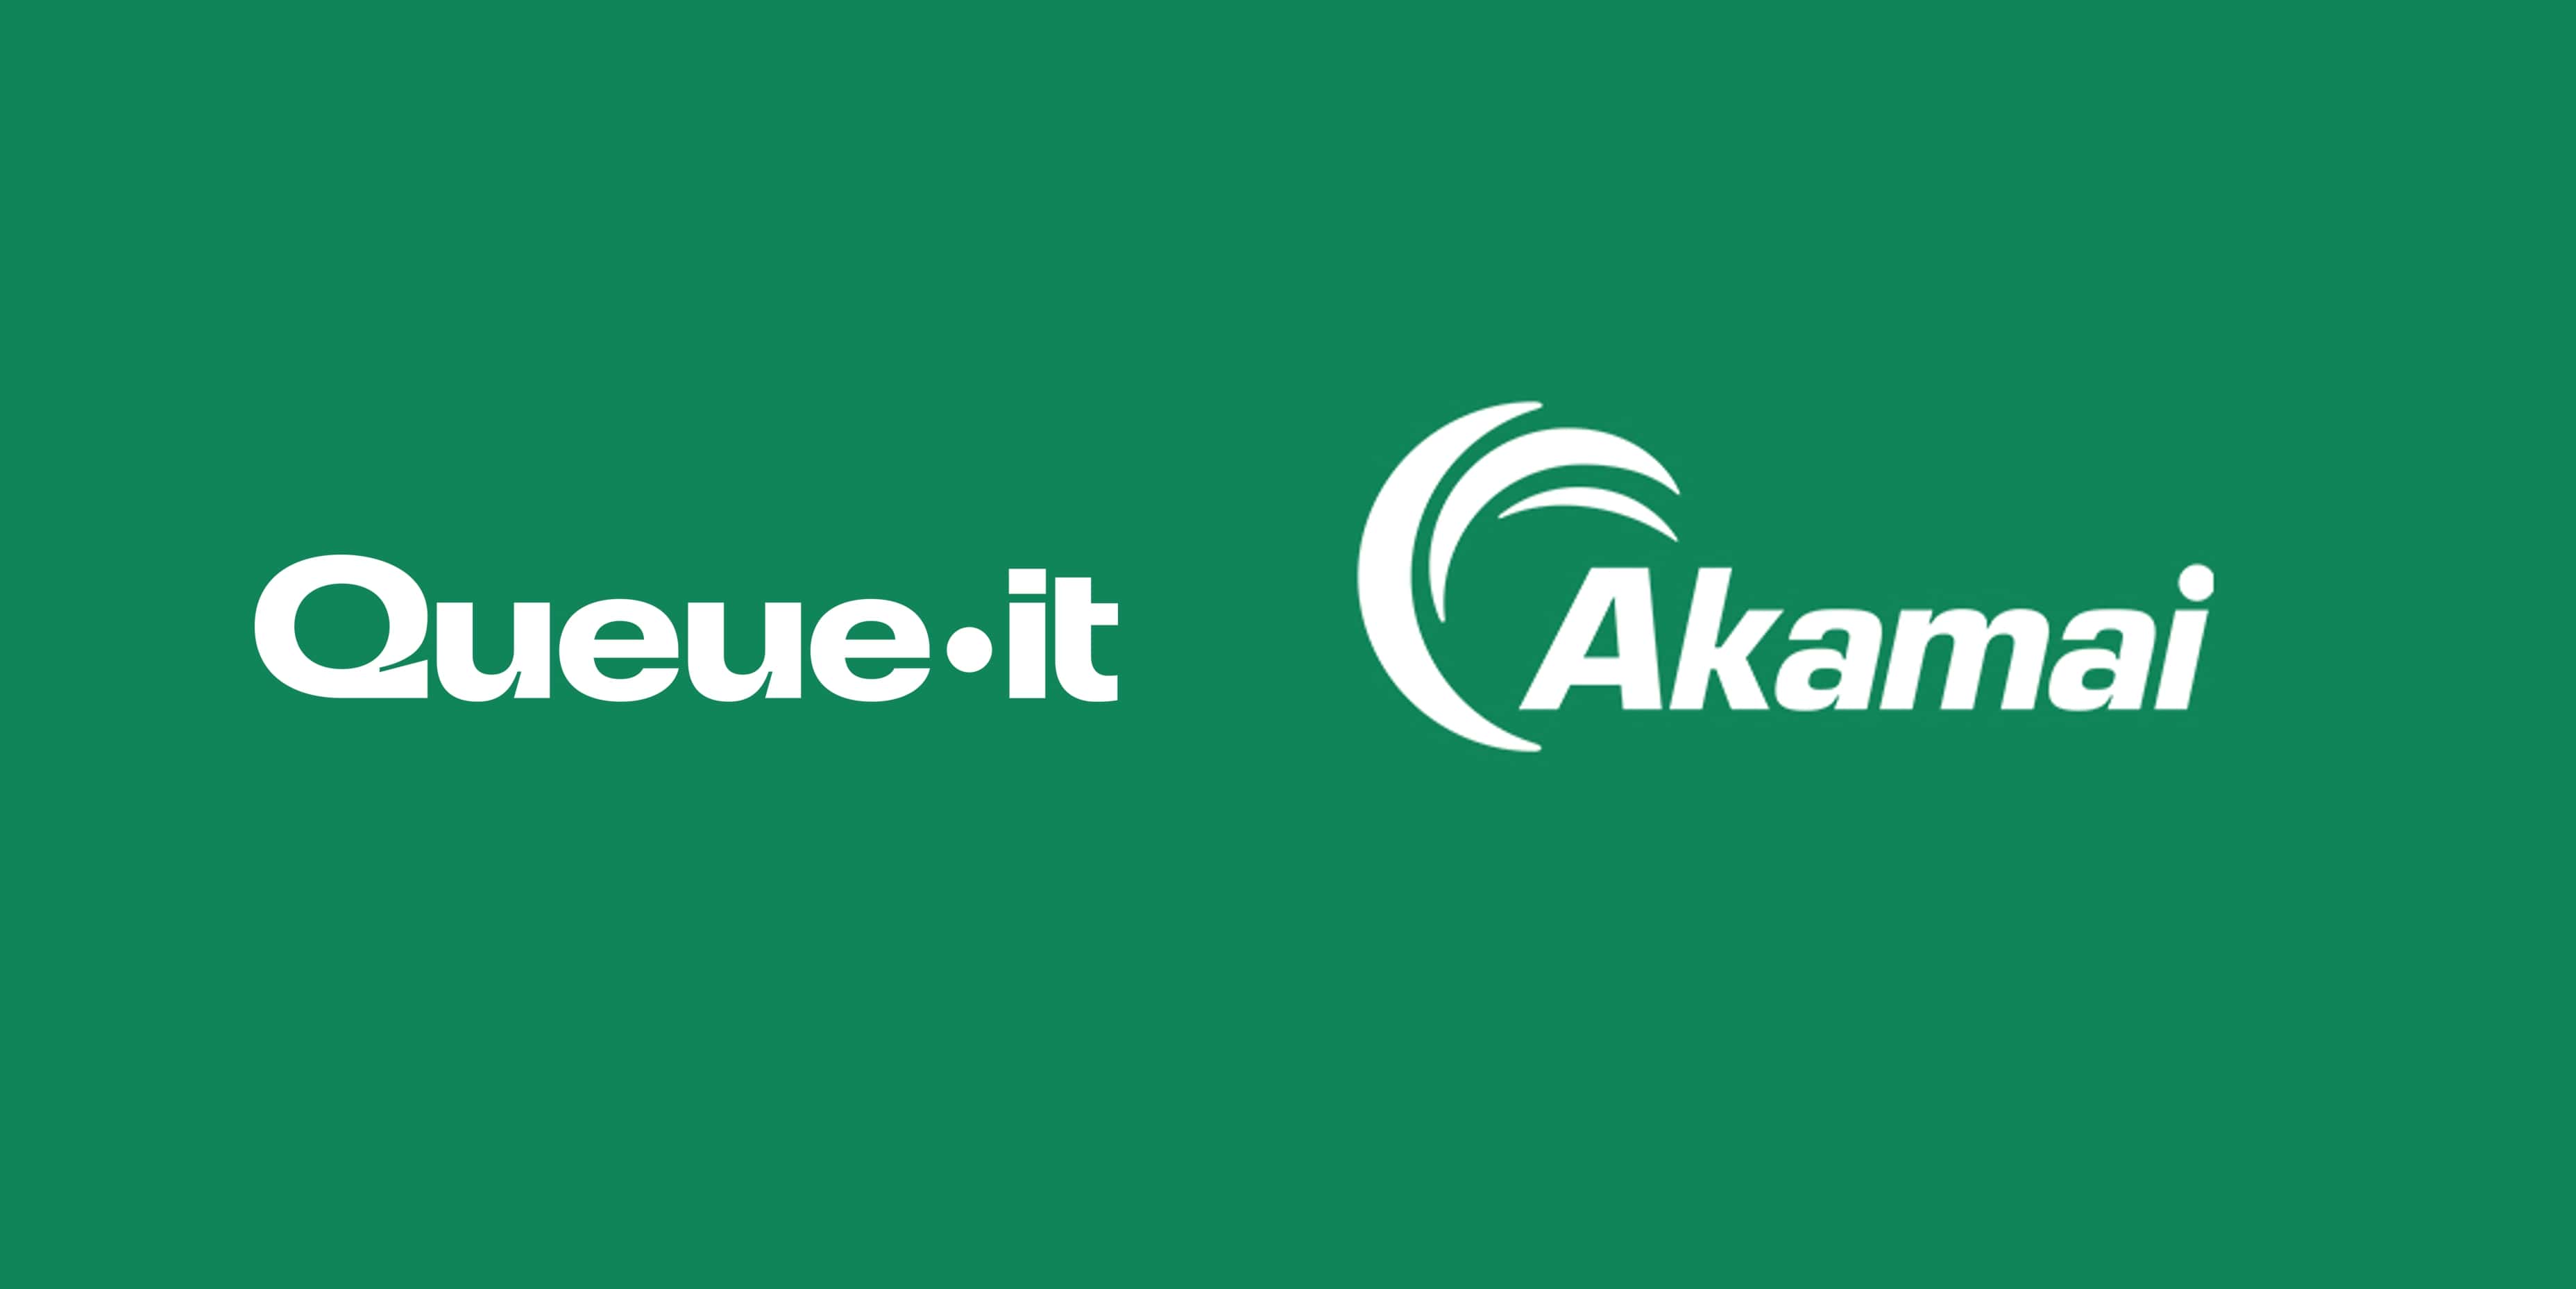 Akamai & Queue-it logos on green background